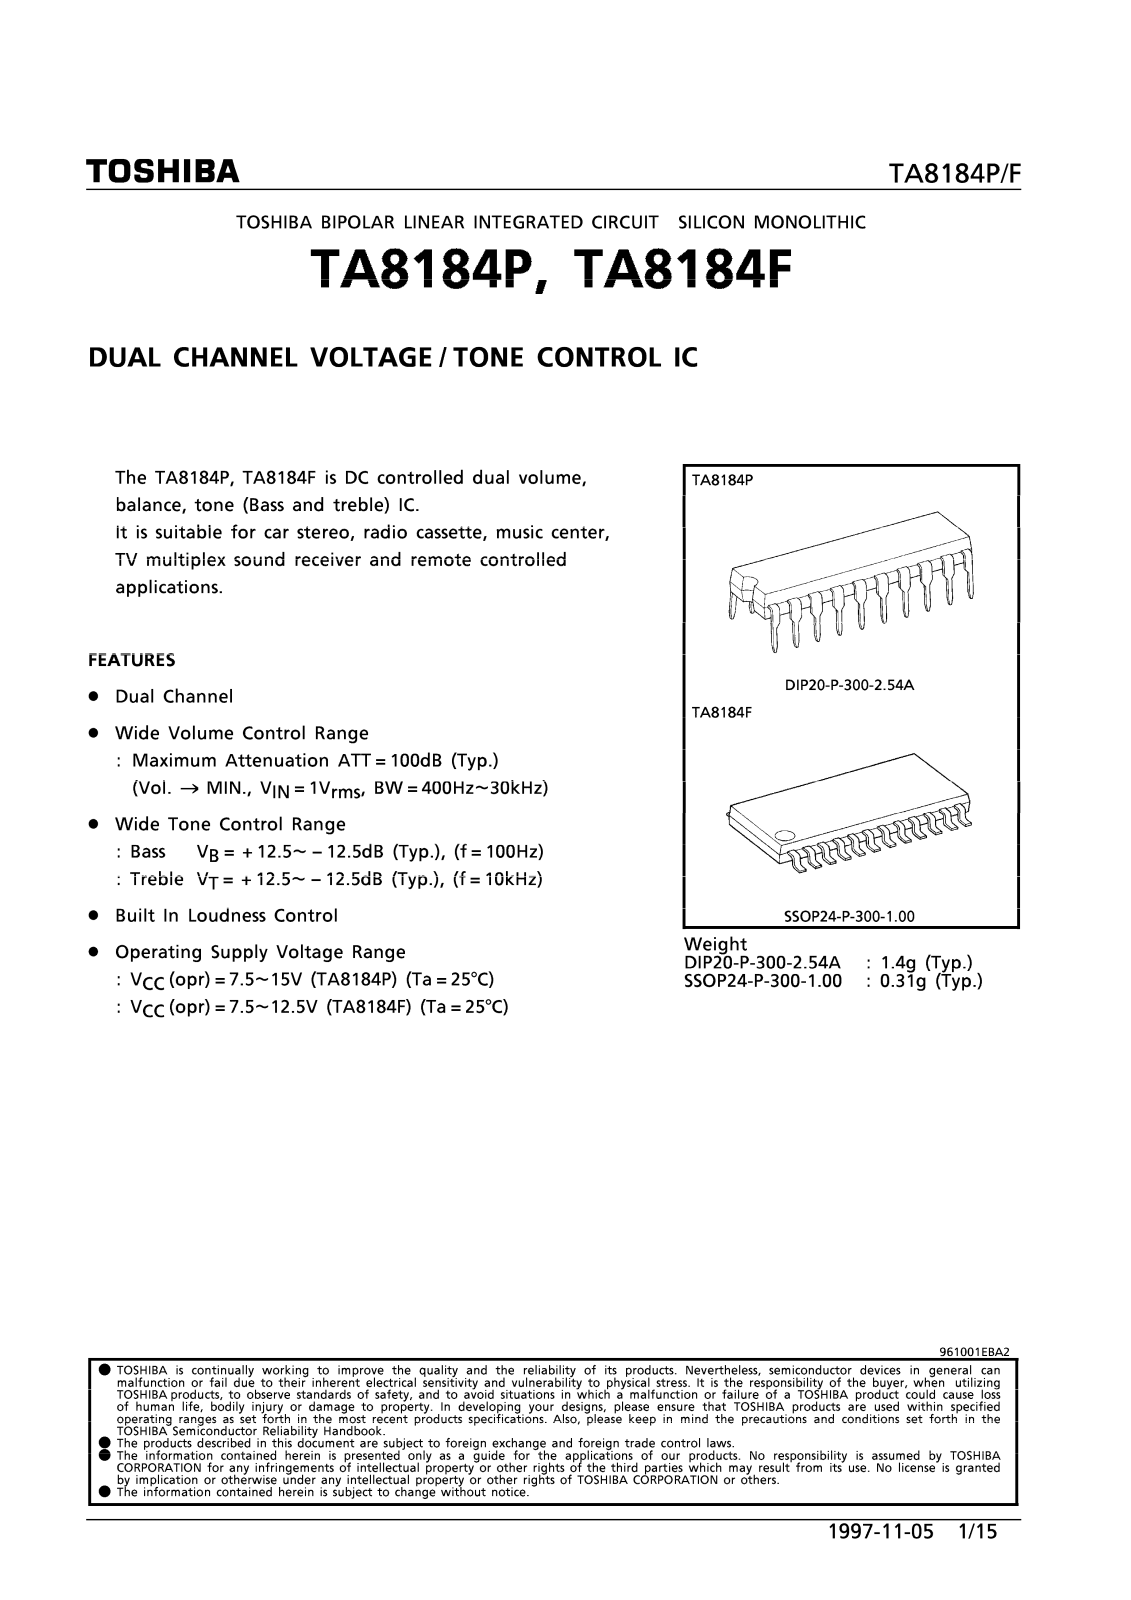 Toshiba TA8184P, TA8184F Datasheet